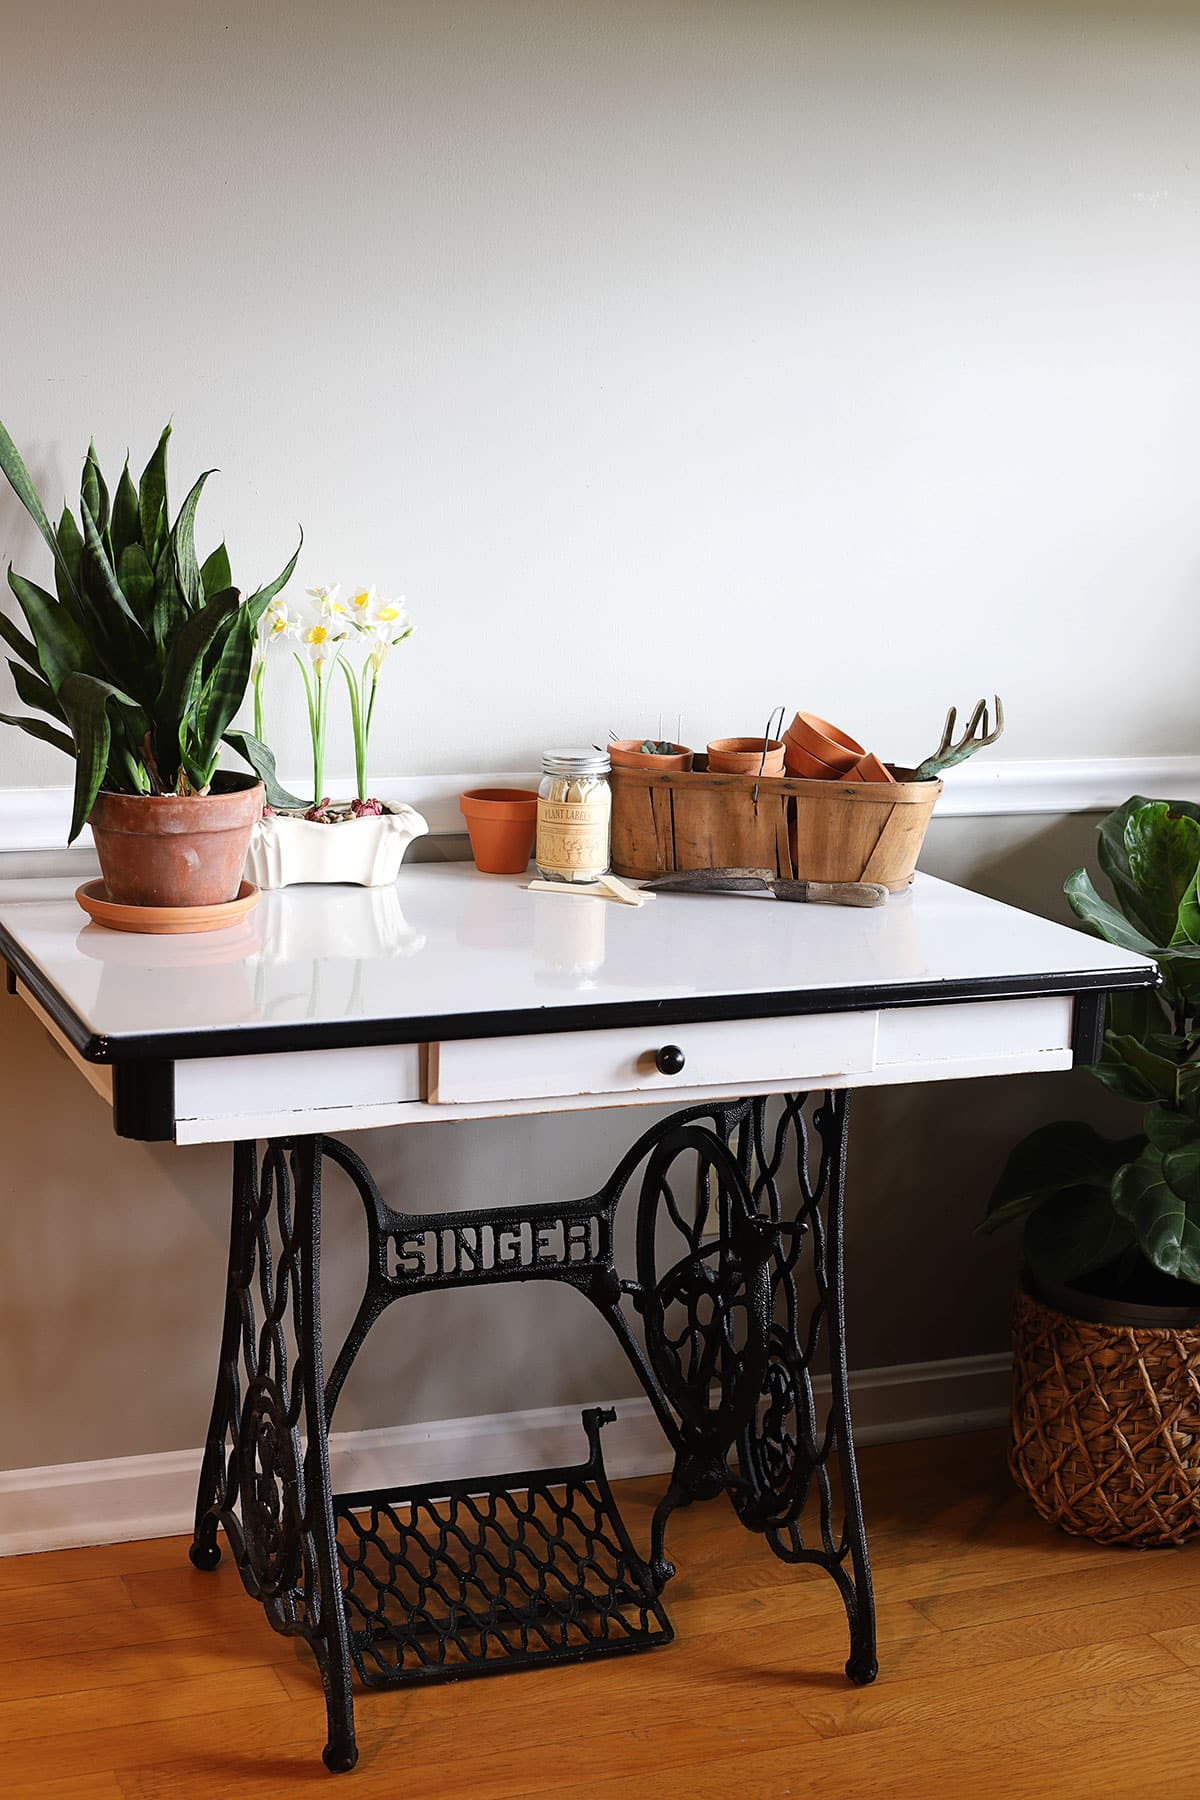 Vintage porcelain enamel kitchen table combined with vintage cast iron Singer sewing machine base.